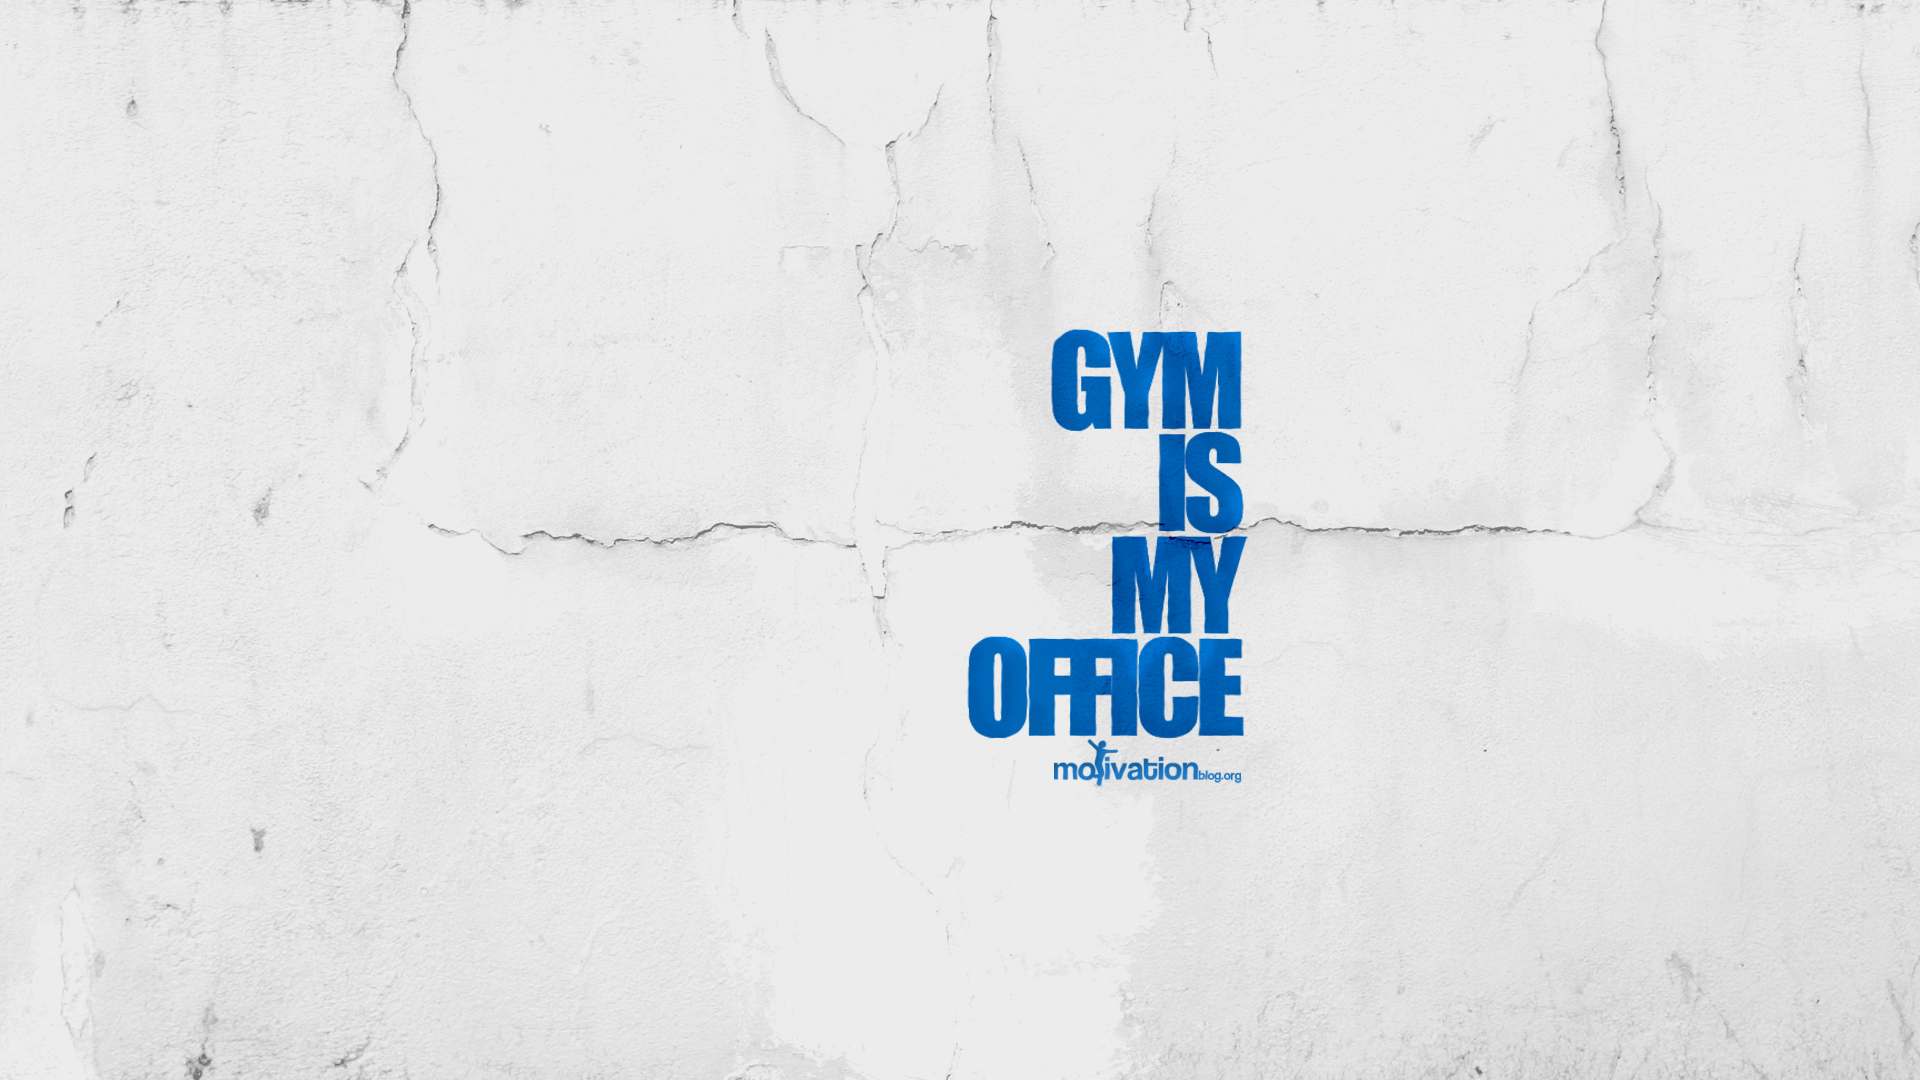  workout quotes wallpaper Motivation Blog Like workout motivation